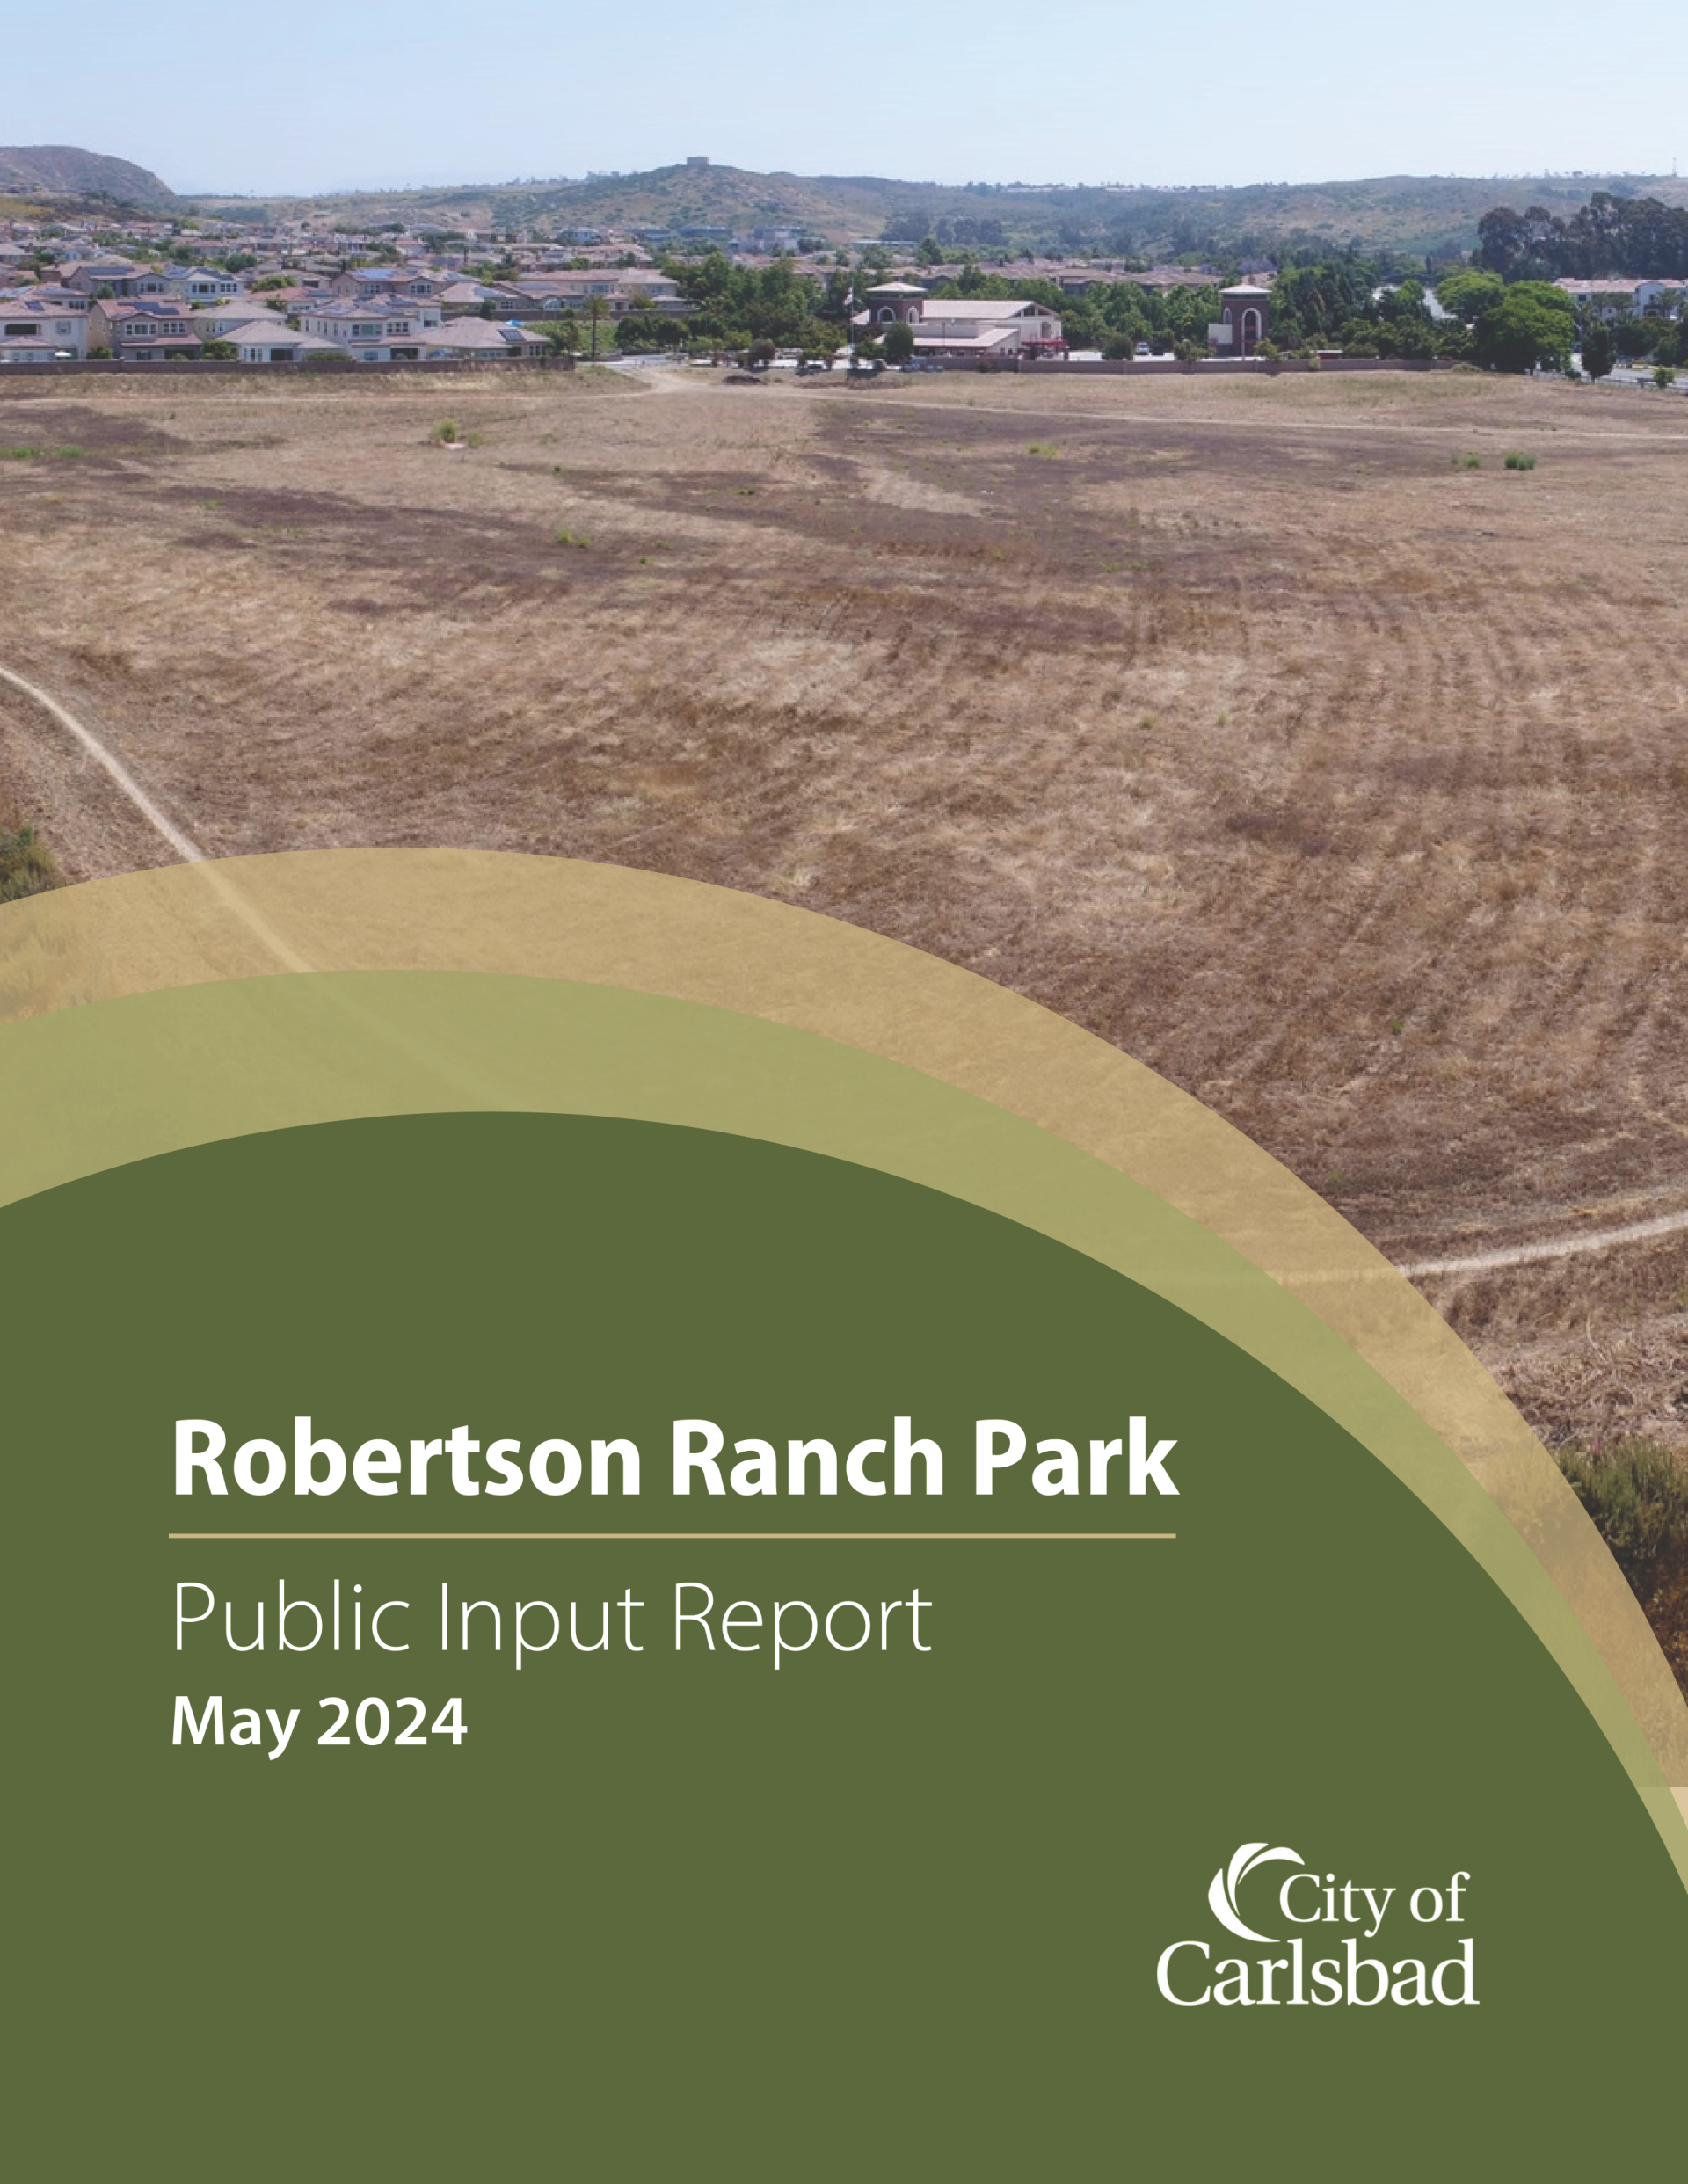 RR Park input report cover